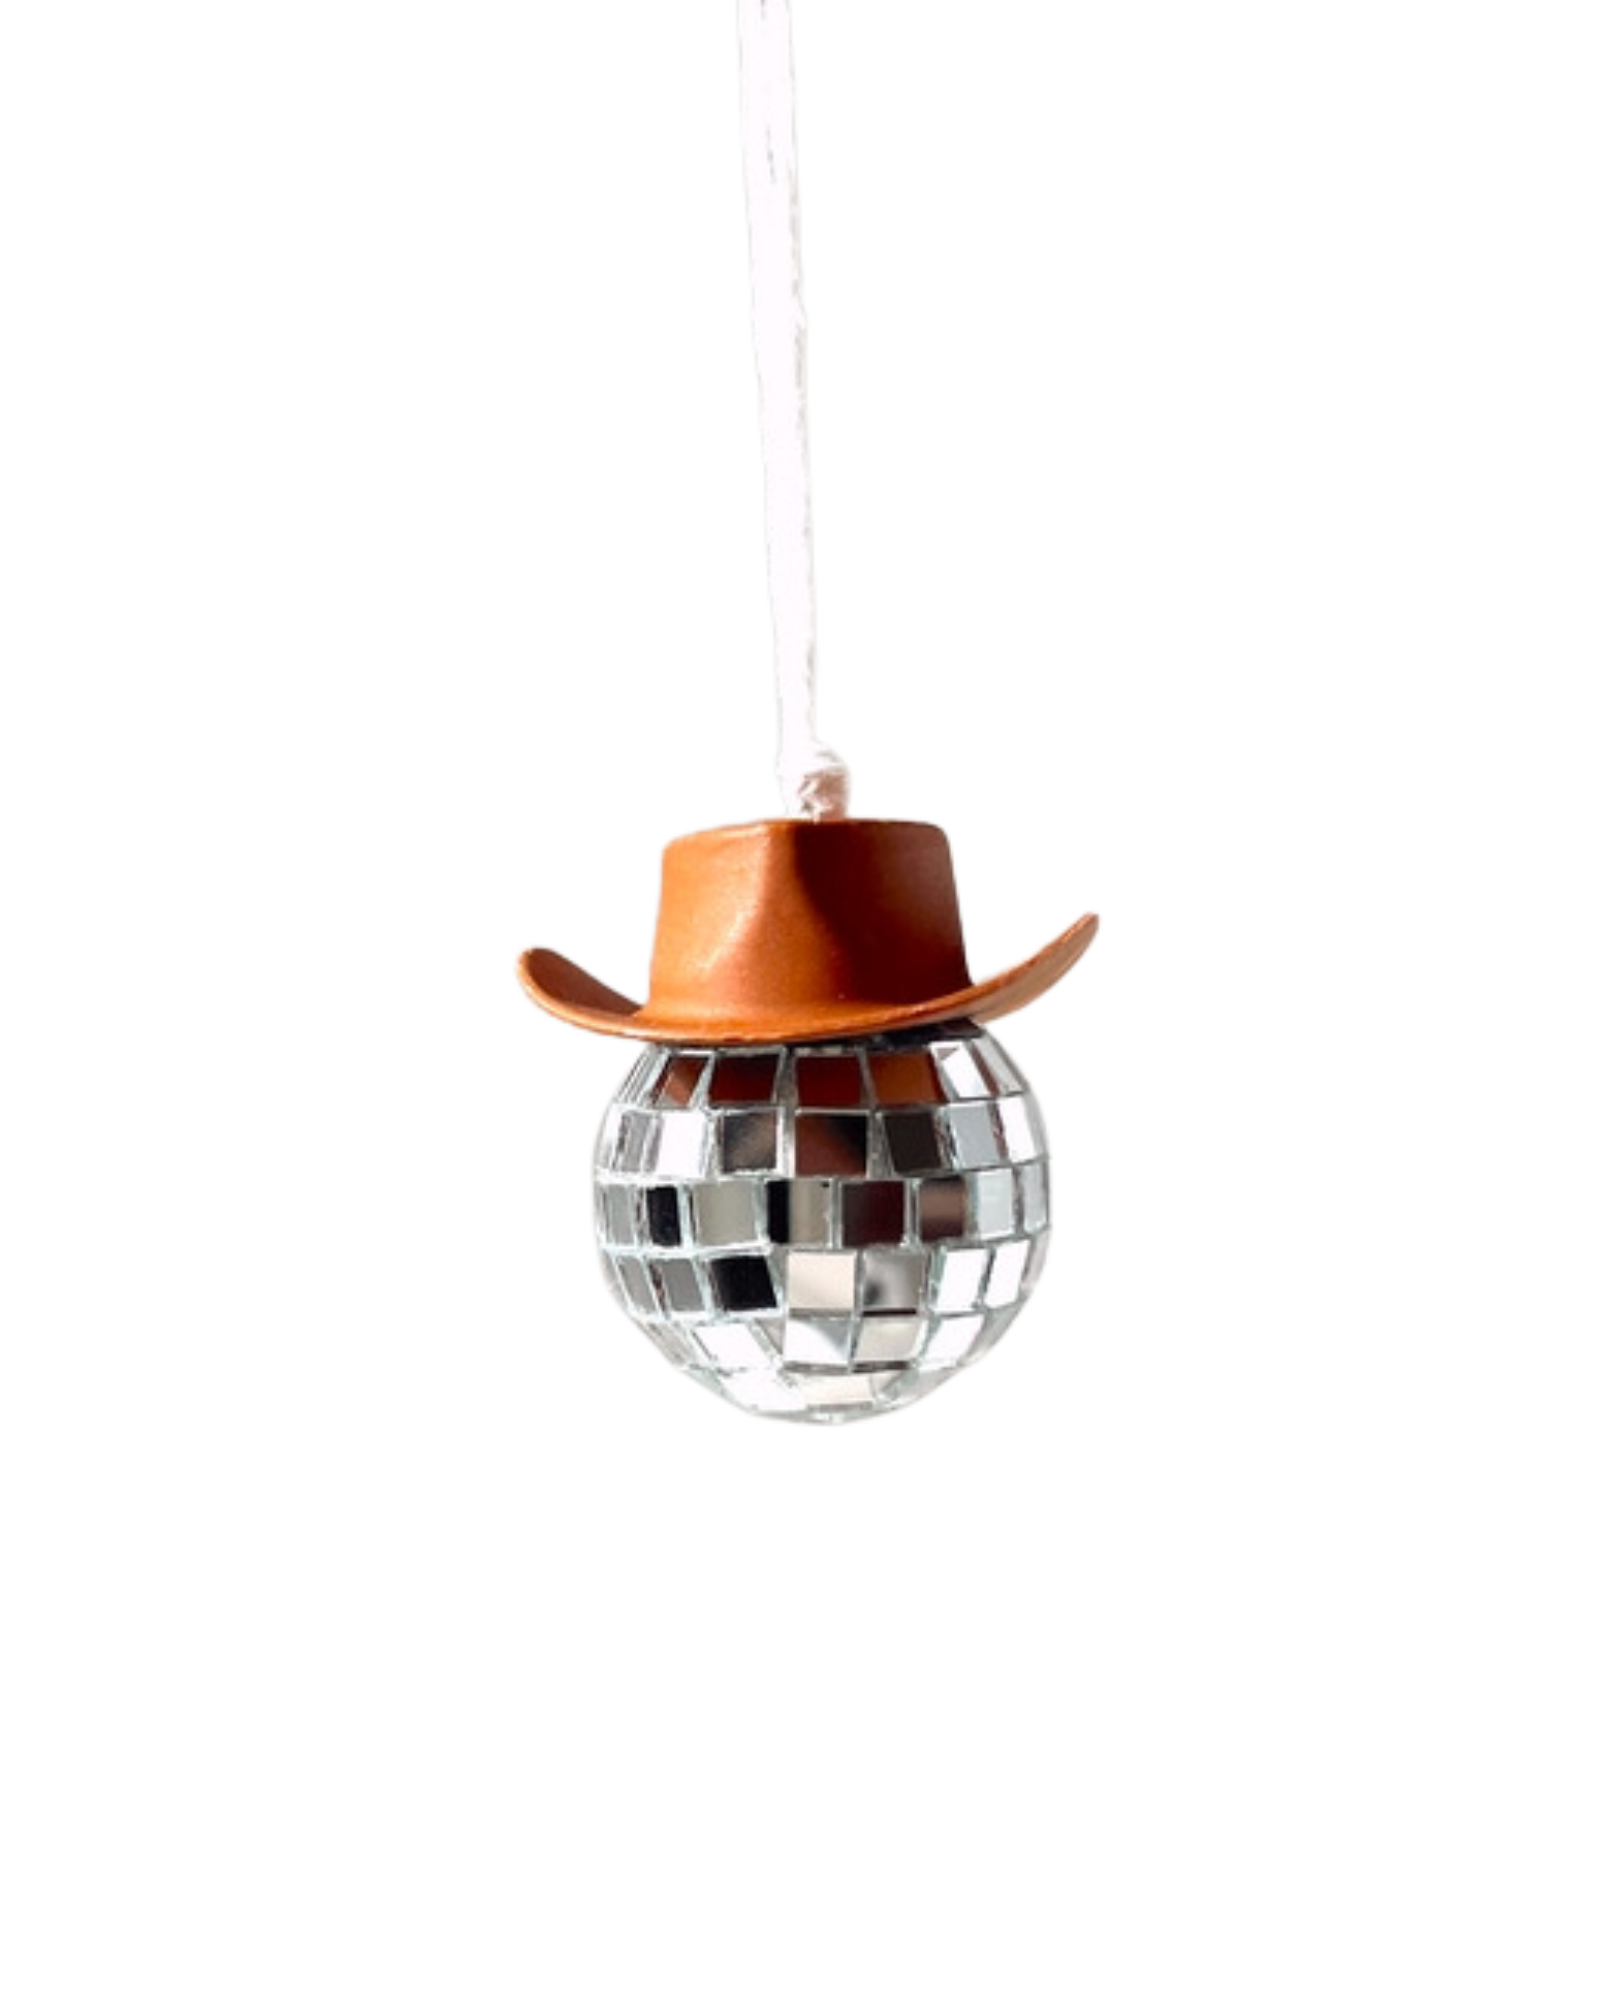  Disco Ball Car Accessory,Disco Cowboy Hat Accessory